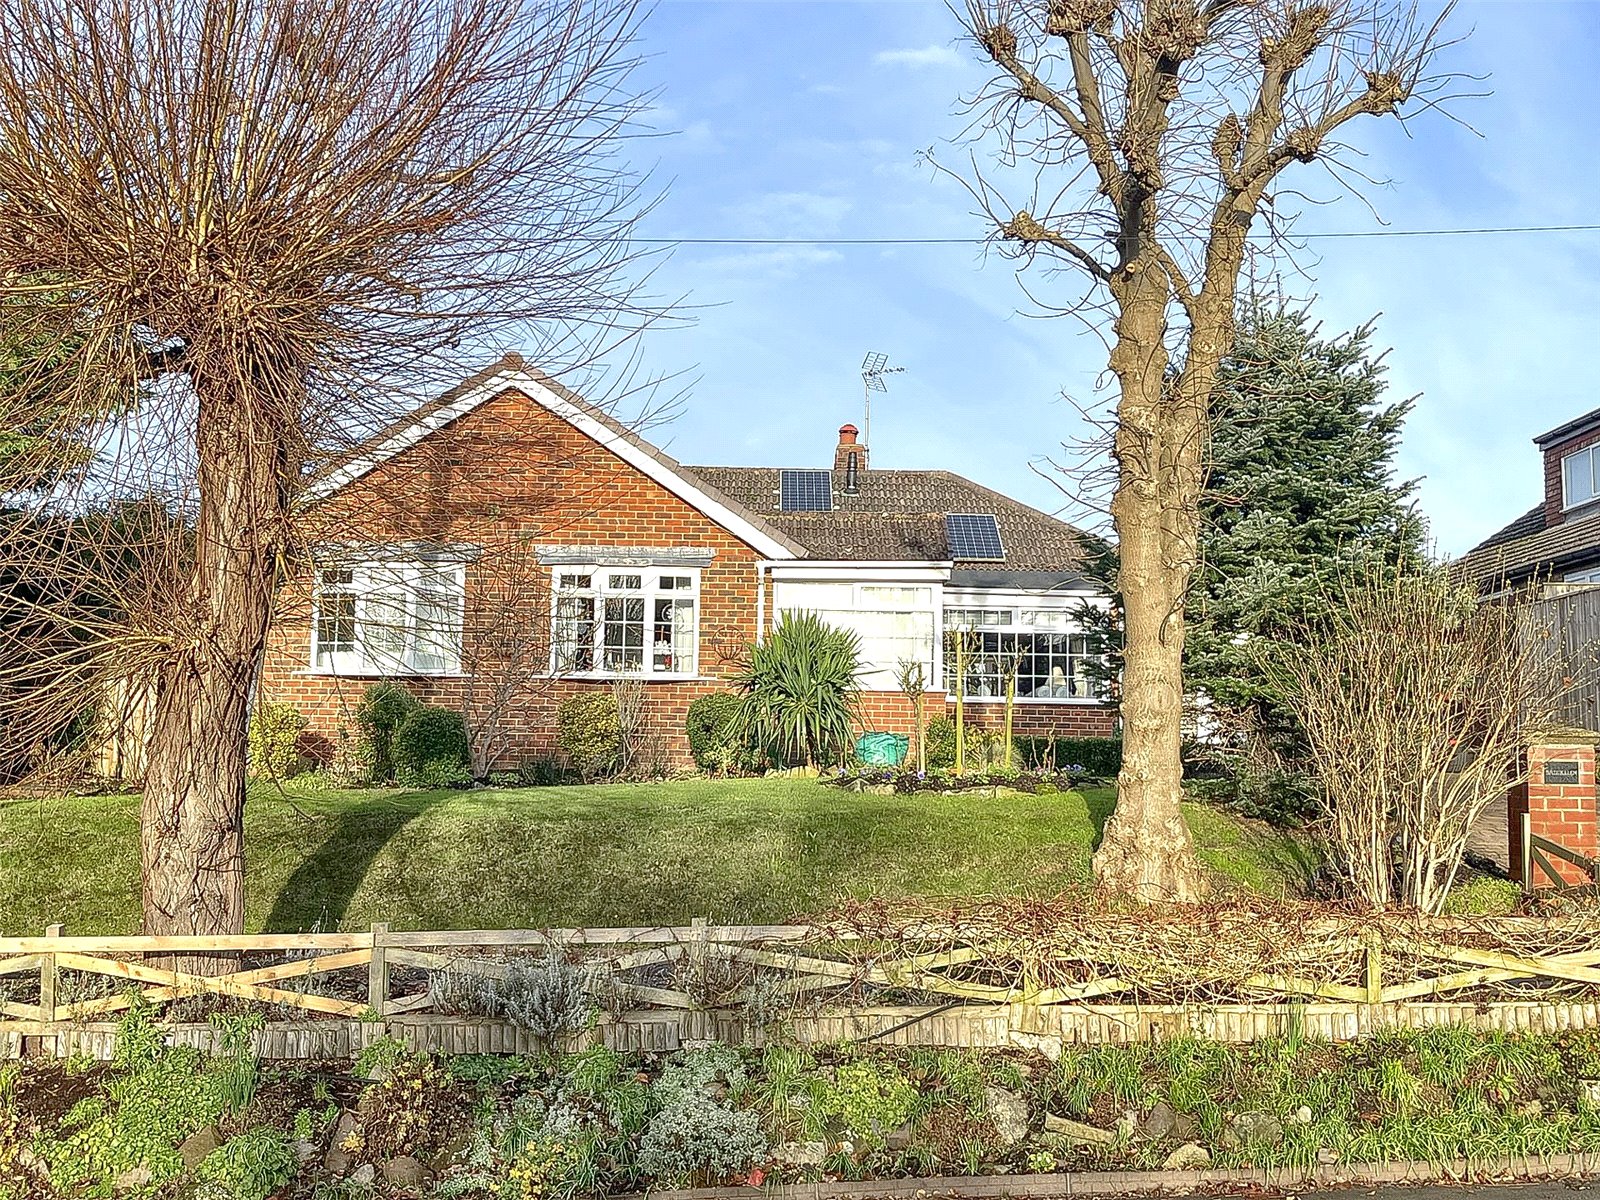 4 bed bungalow for sale in Forest Lane, Kirklevington - Property Image 1